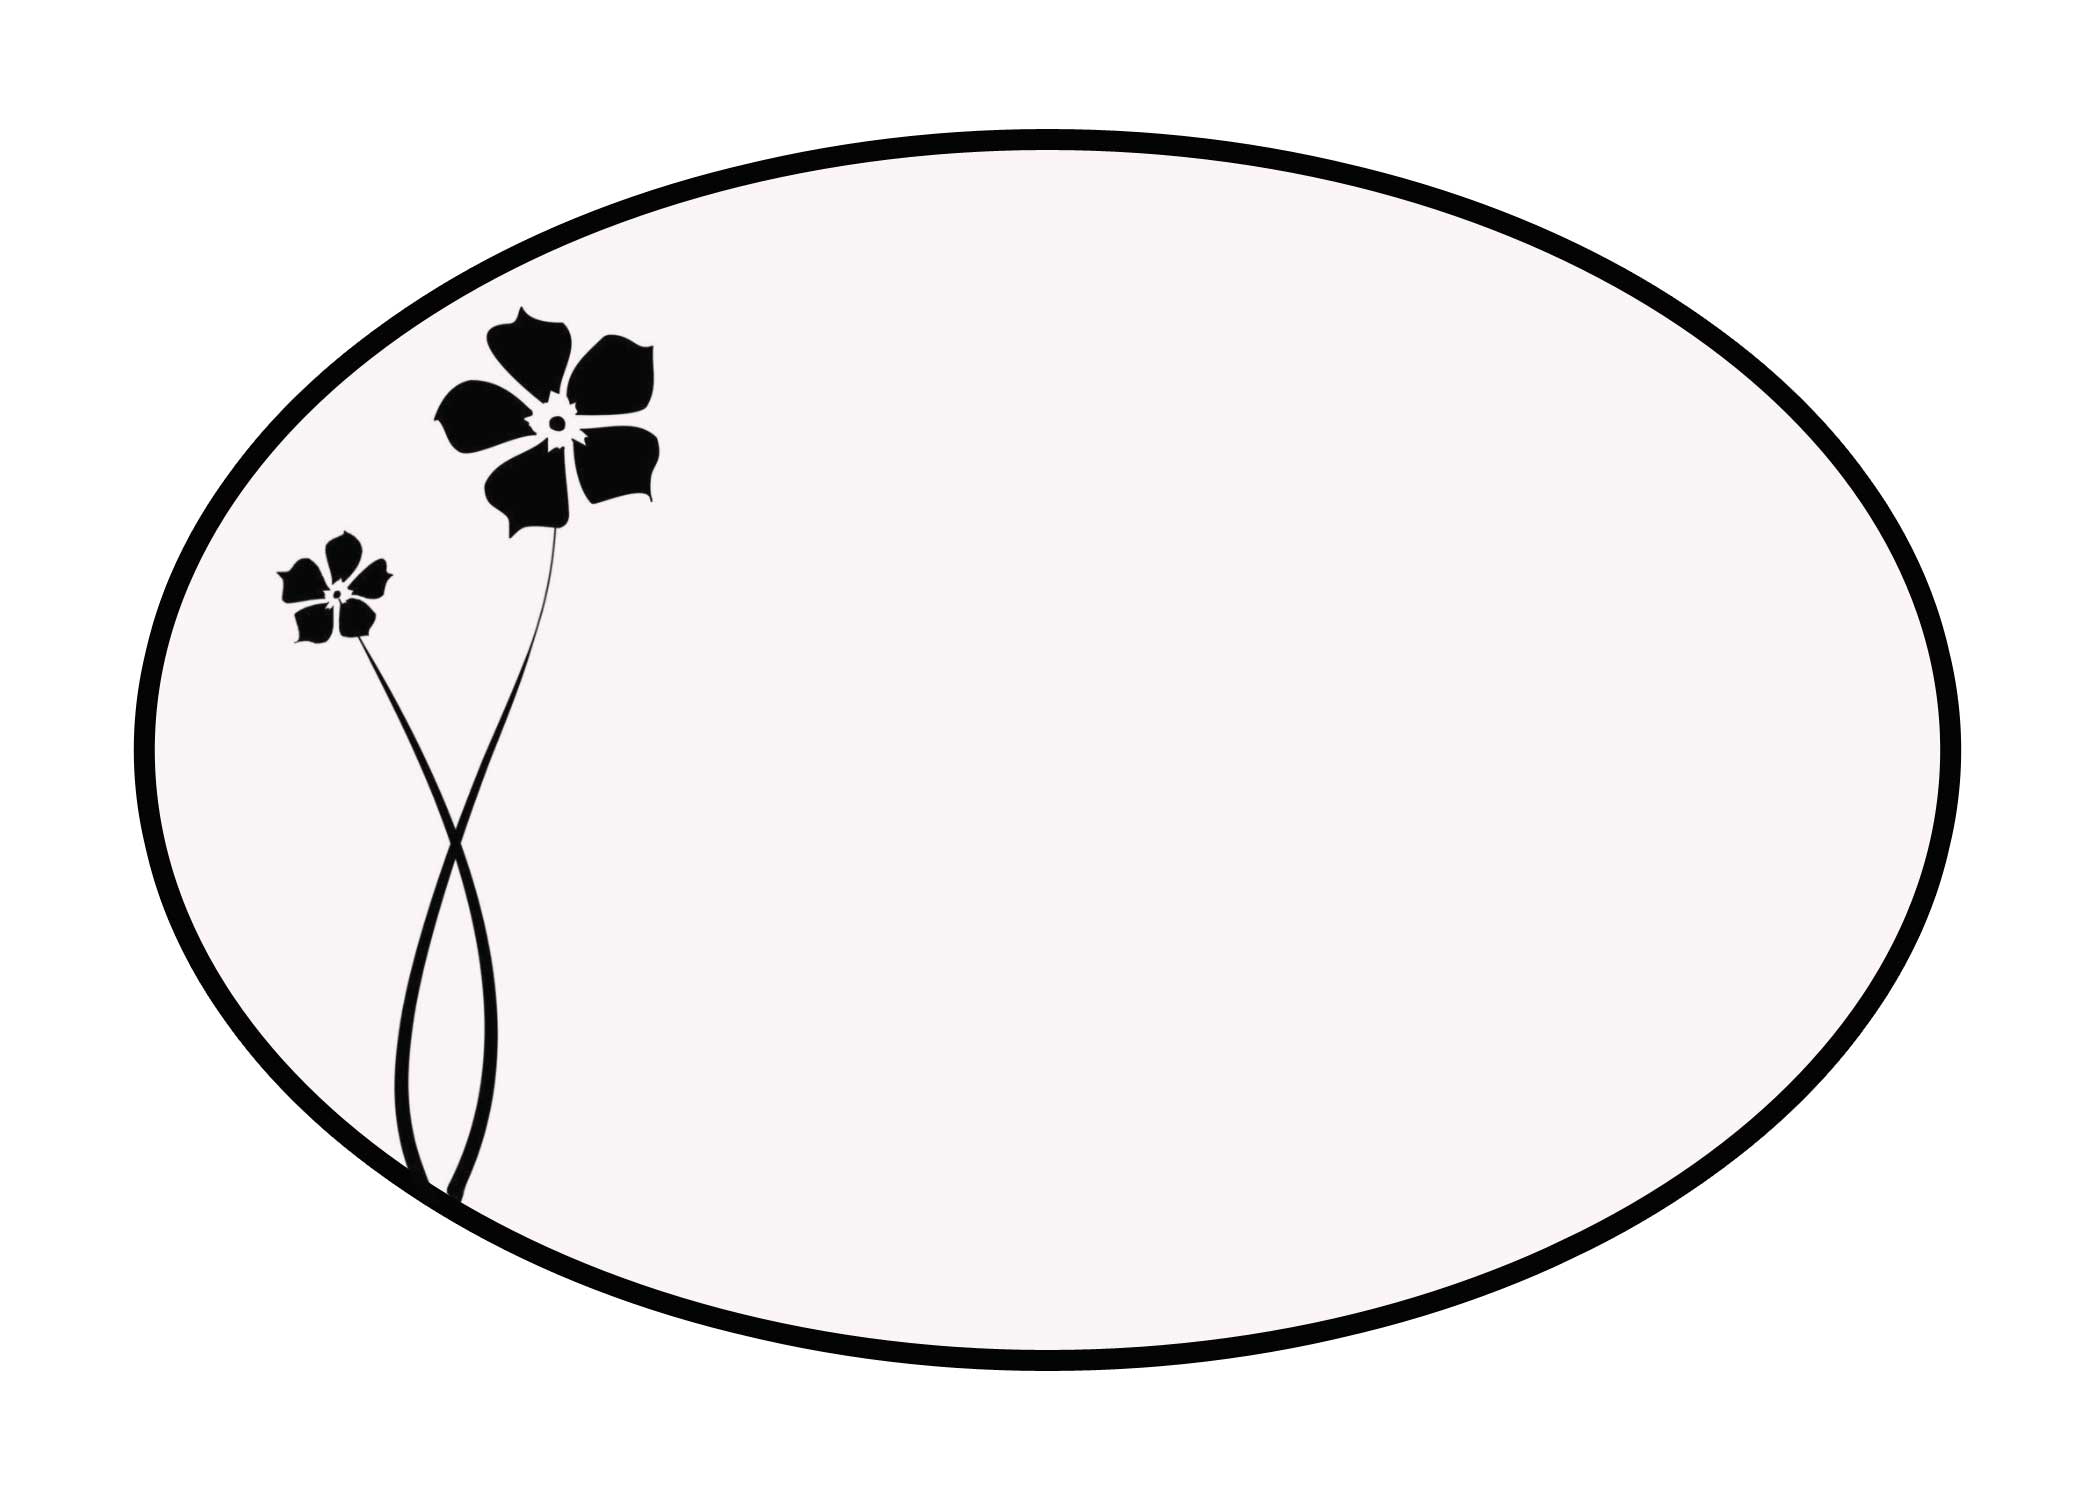 Clipart oval shape